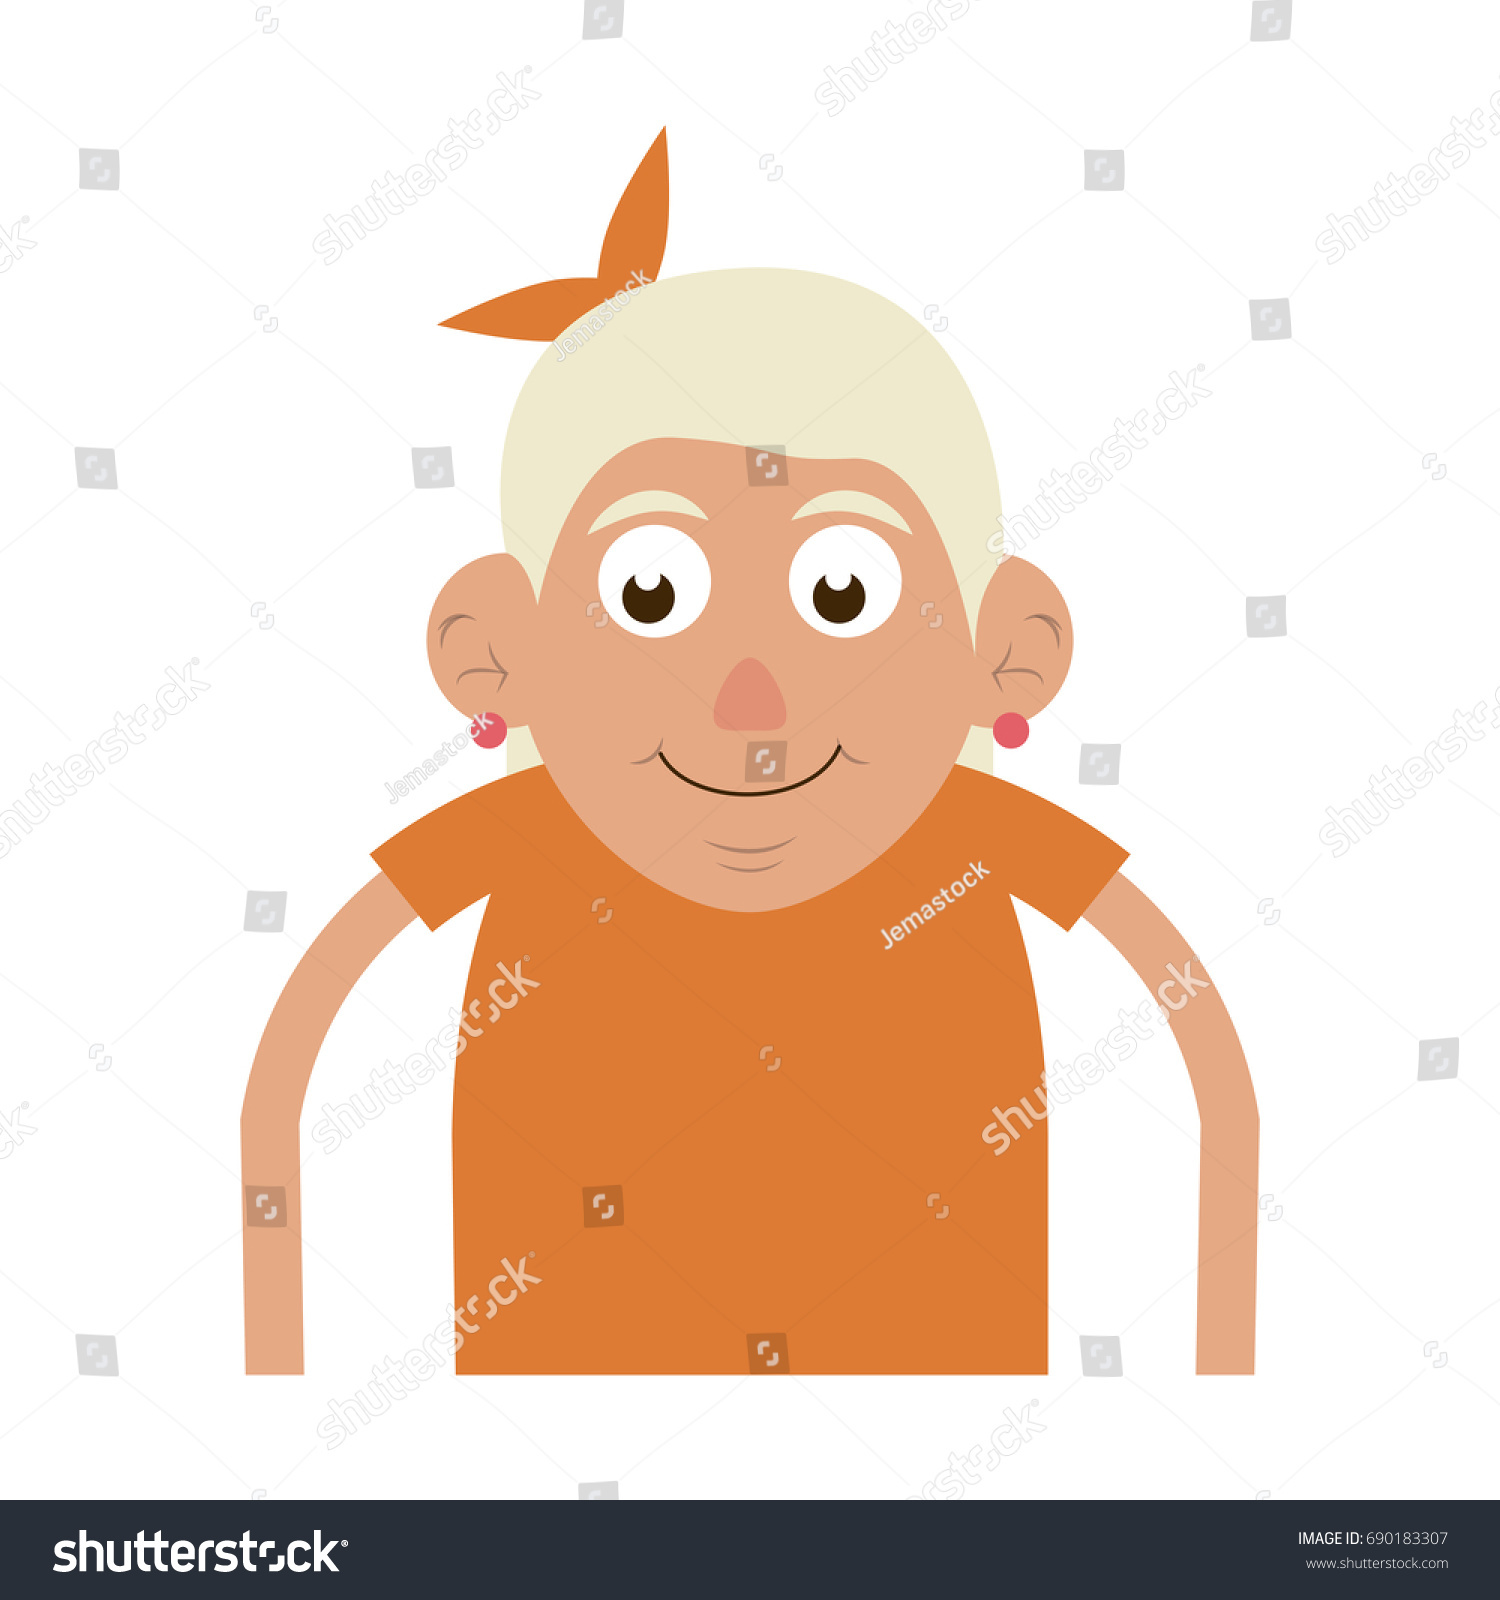 cute elderly person icon image  #690183307